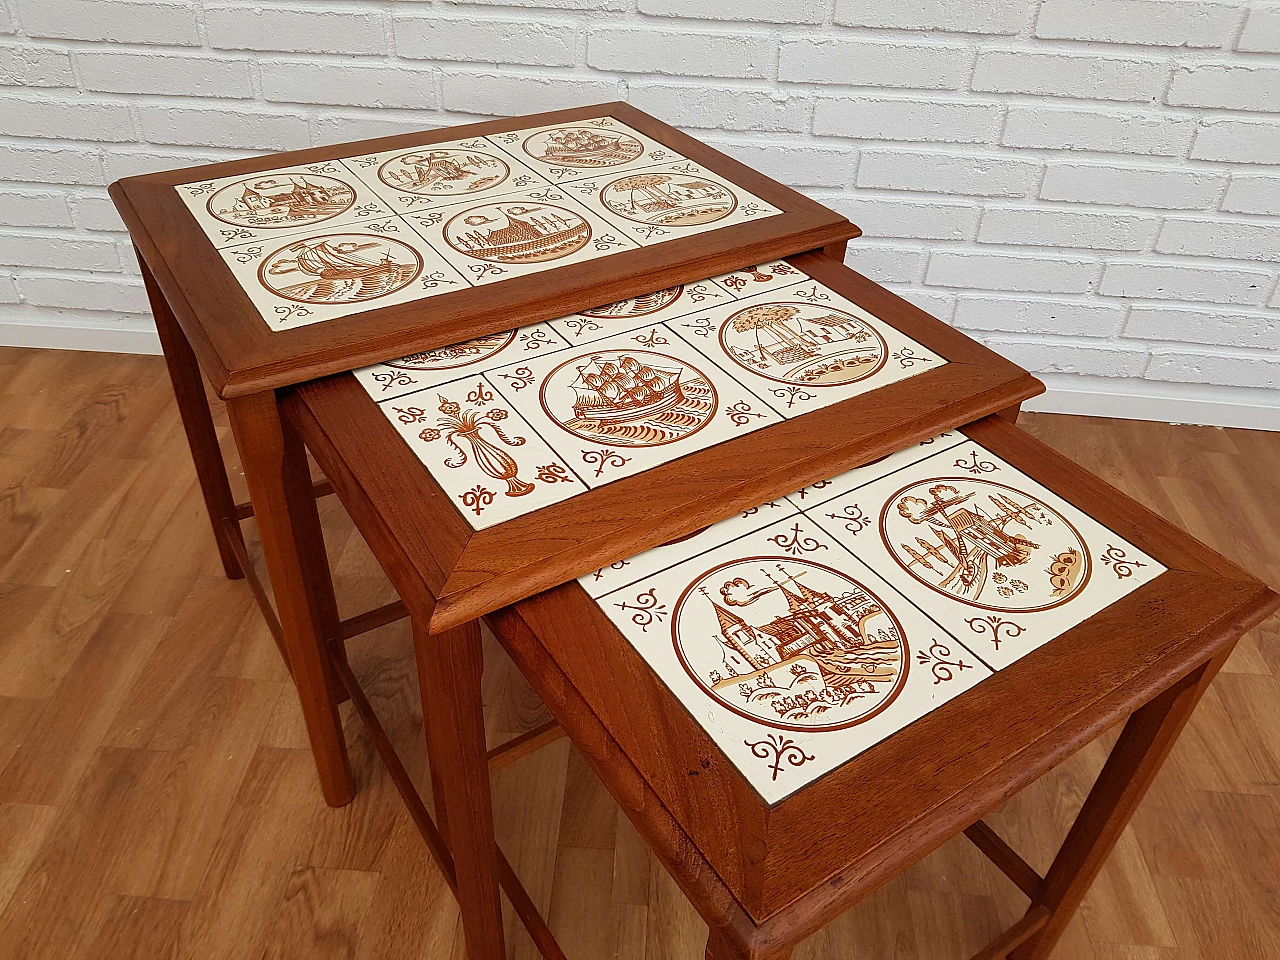 Nesting table, 60s, danish design, hand-painted ceramic tiles, teak wood 1064945